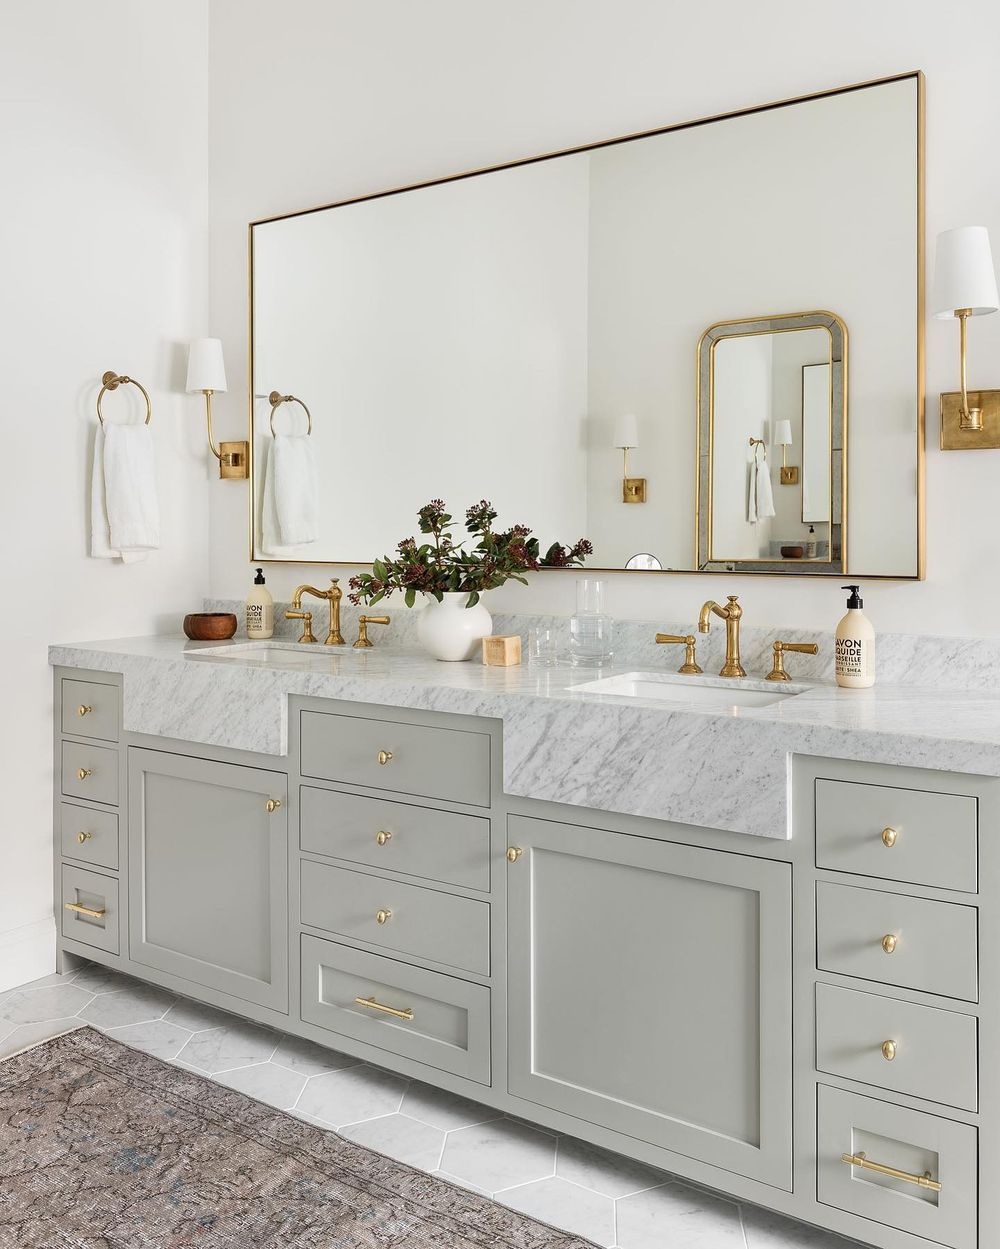 Double bathroom vanity sage green cabinets marble countertops @studiomcgee